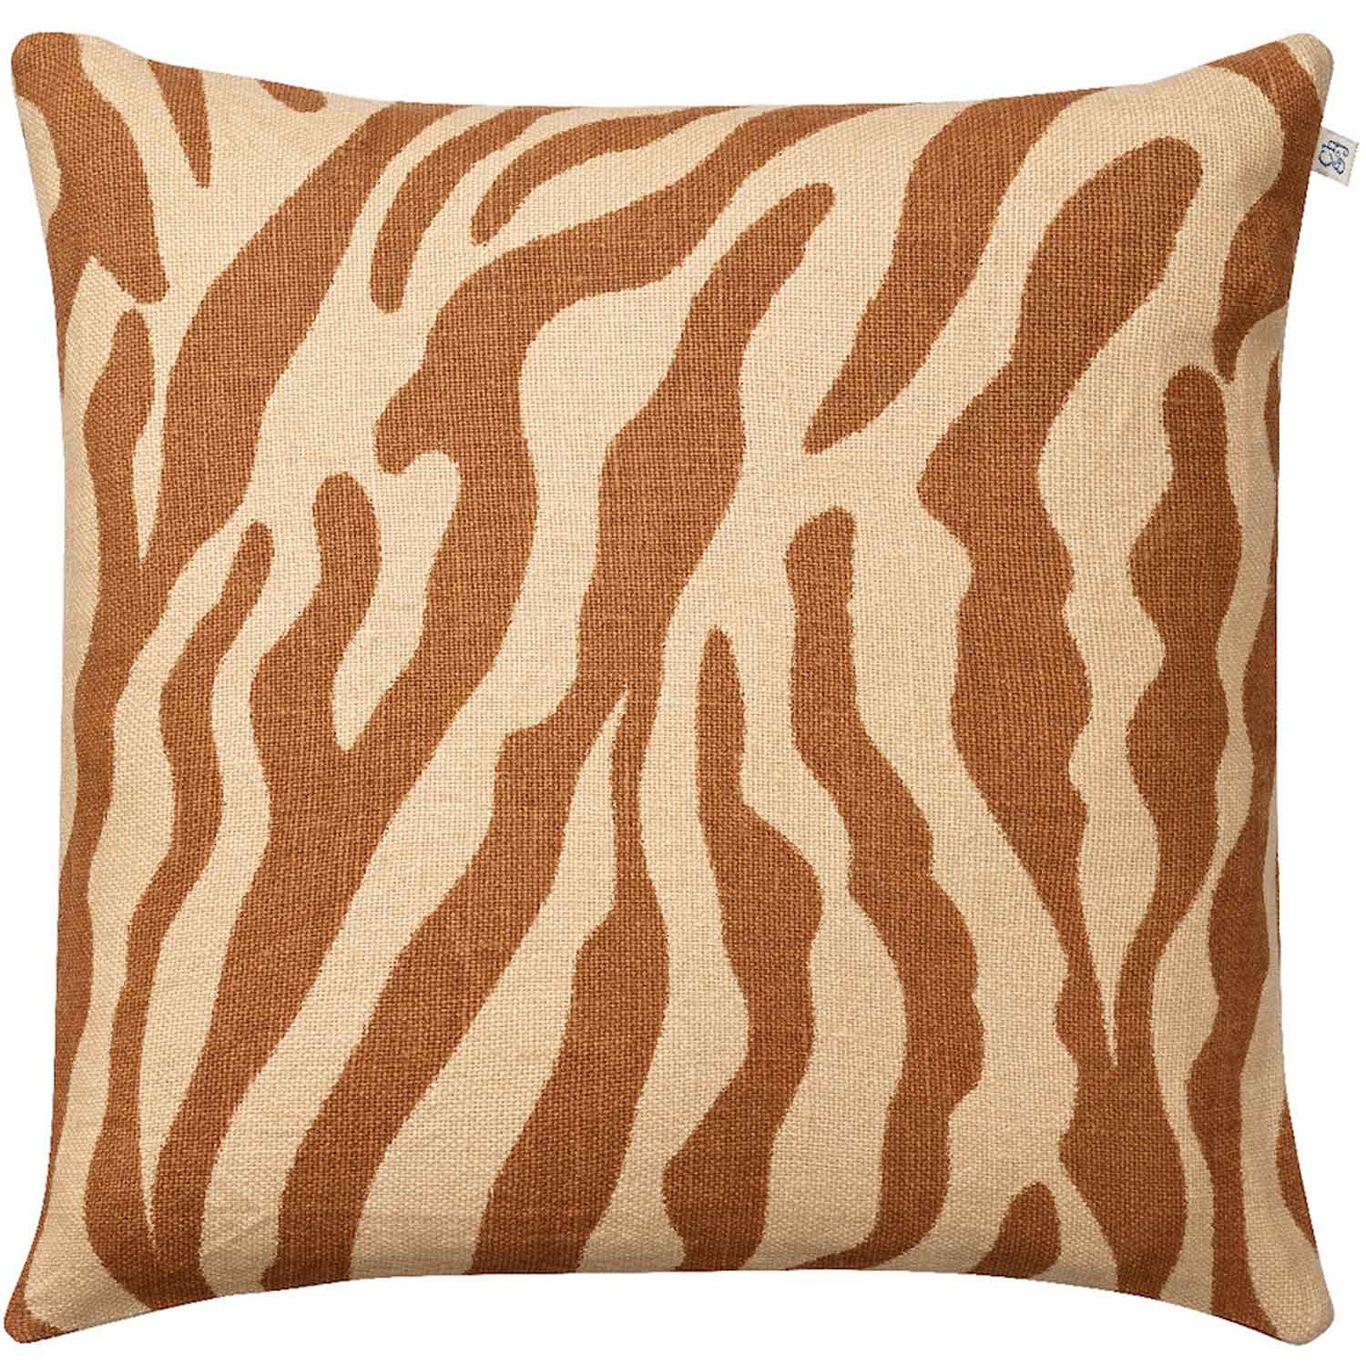 Zebra Cushion Cover, 50x50 cm, Taupe